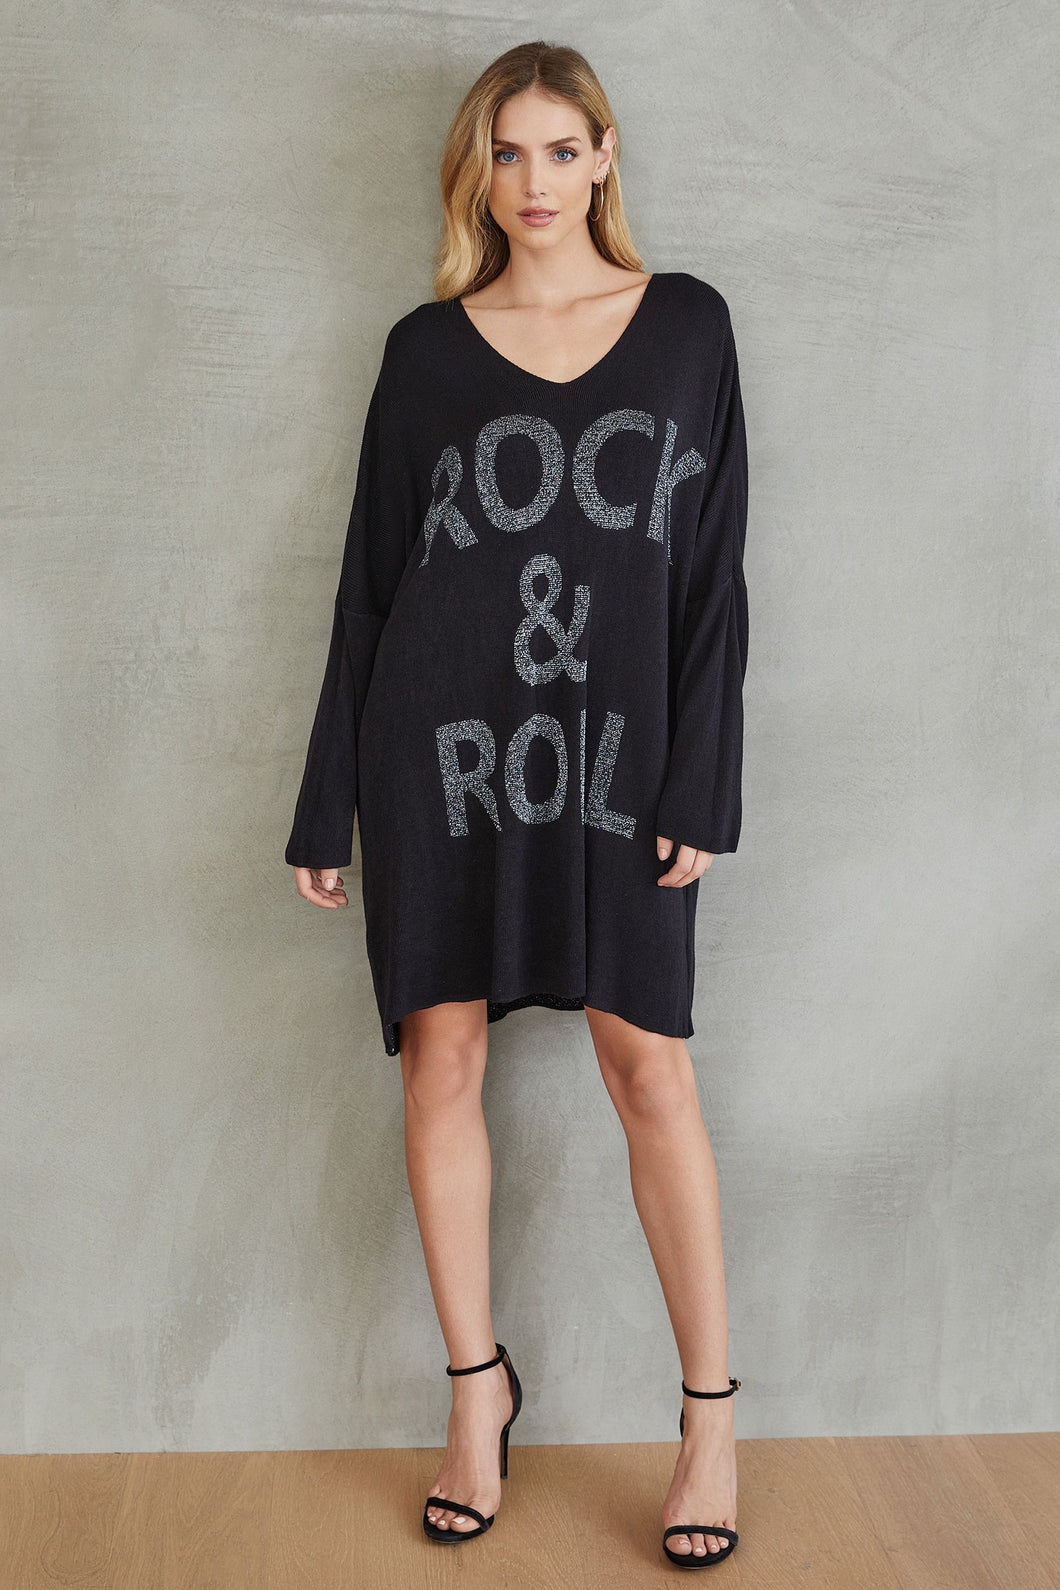 Rock n Roll Tunic Sweater Dress